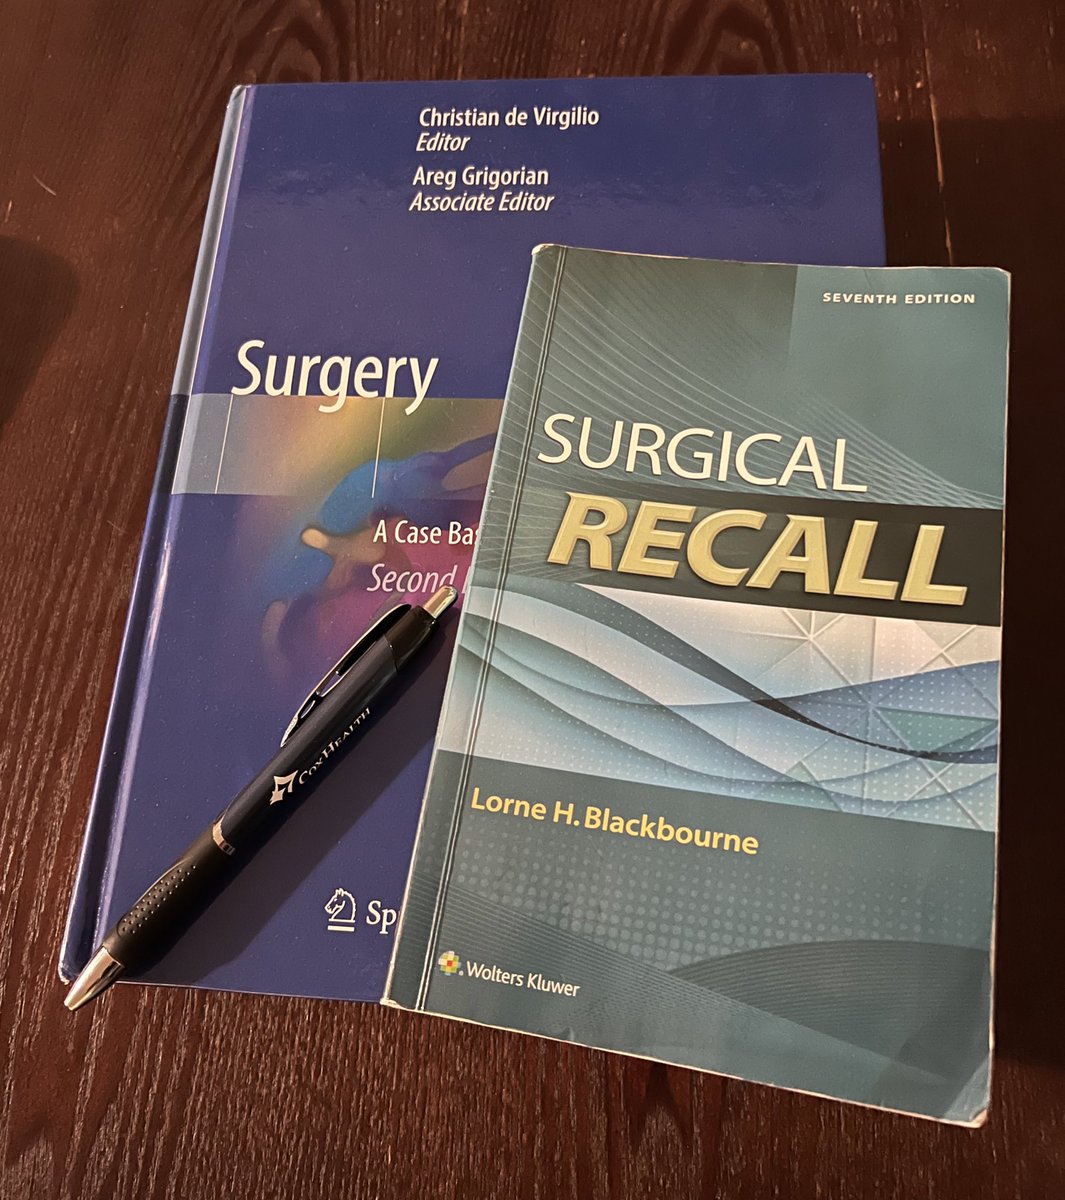 First surgery rotation starts January 1, I’ve got the essentials #SurgTwitter #GenSurg #TraumaSurg #MedEd